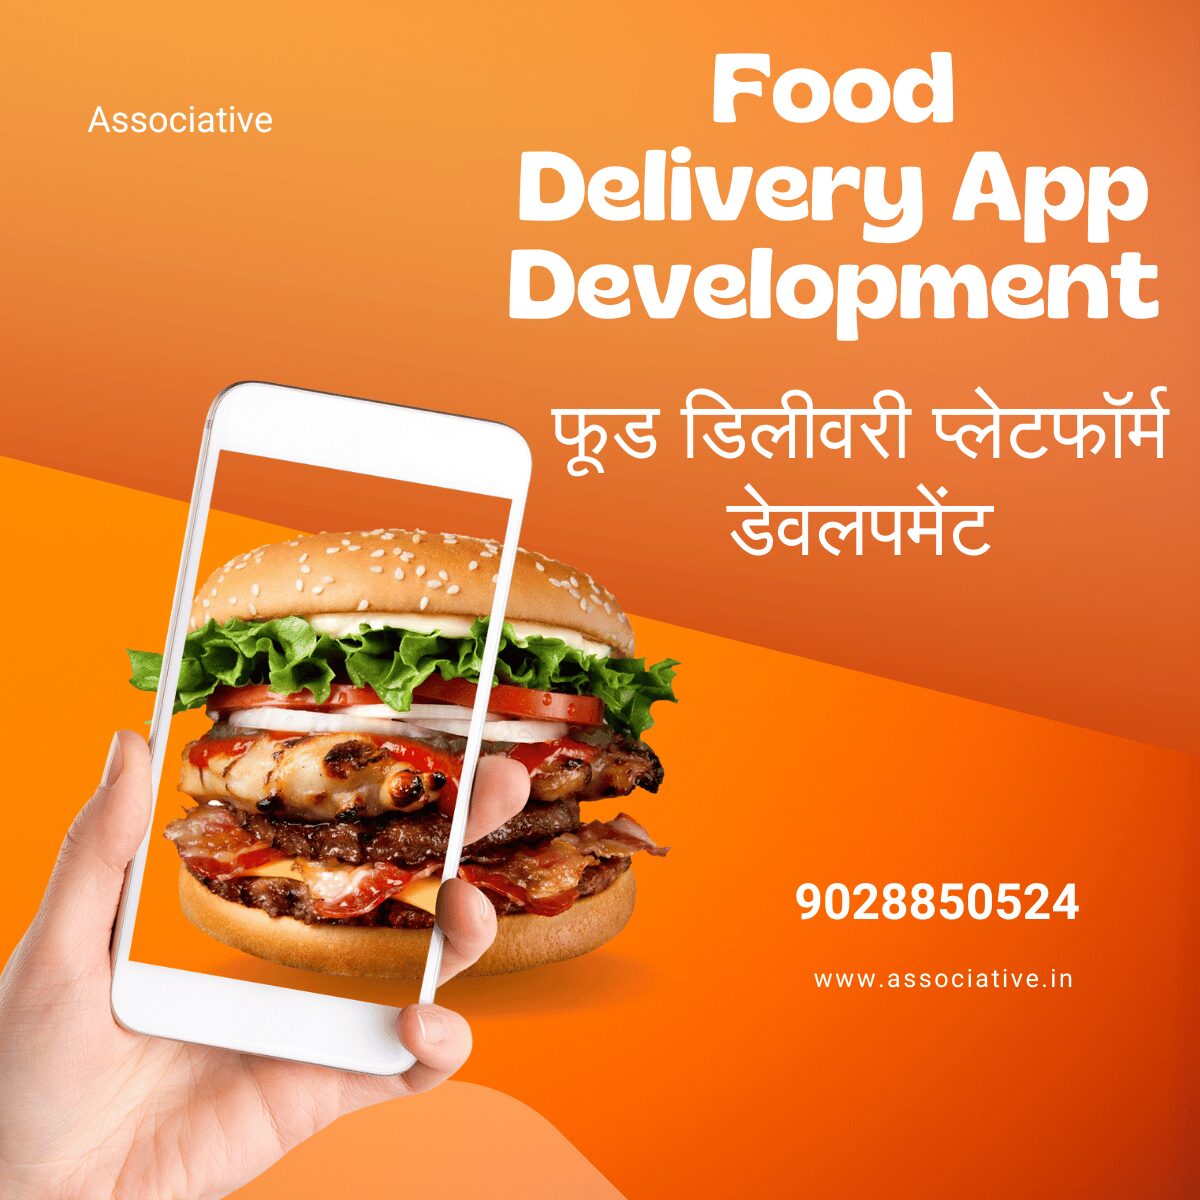 Food Delivery App Development फूड डिलीवरी प्लेटफॉर्म डेवलपमेंट